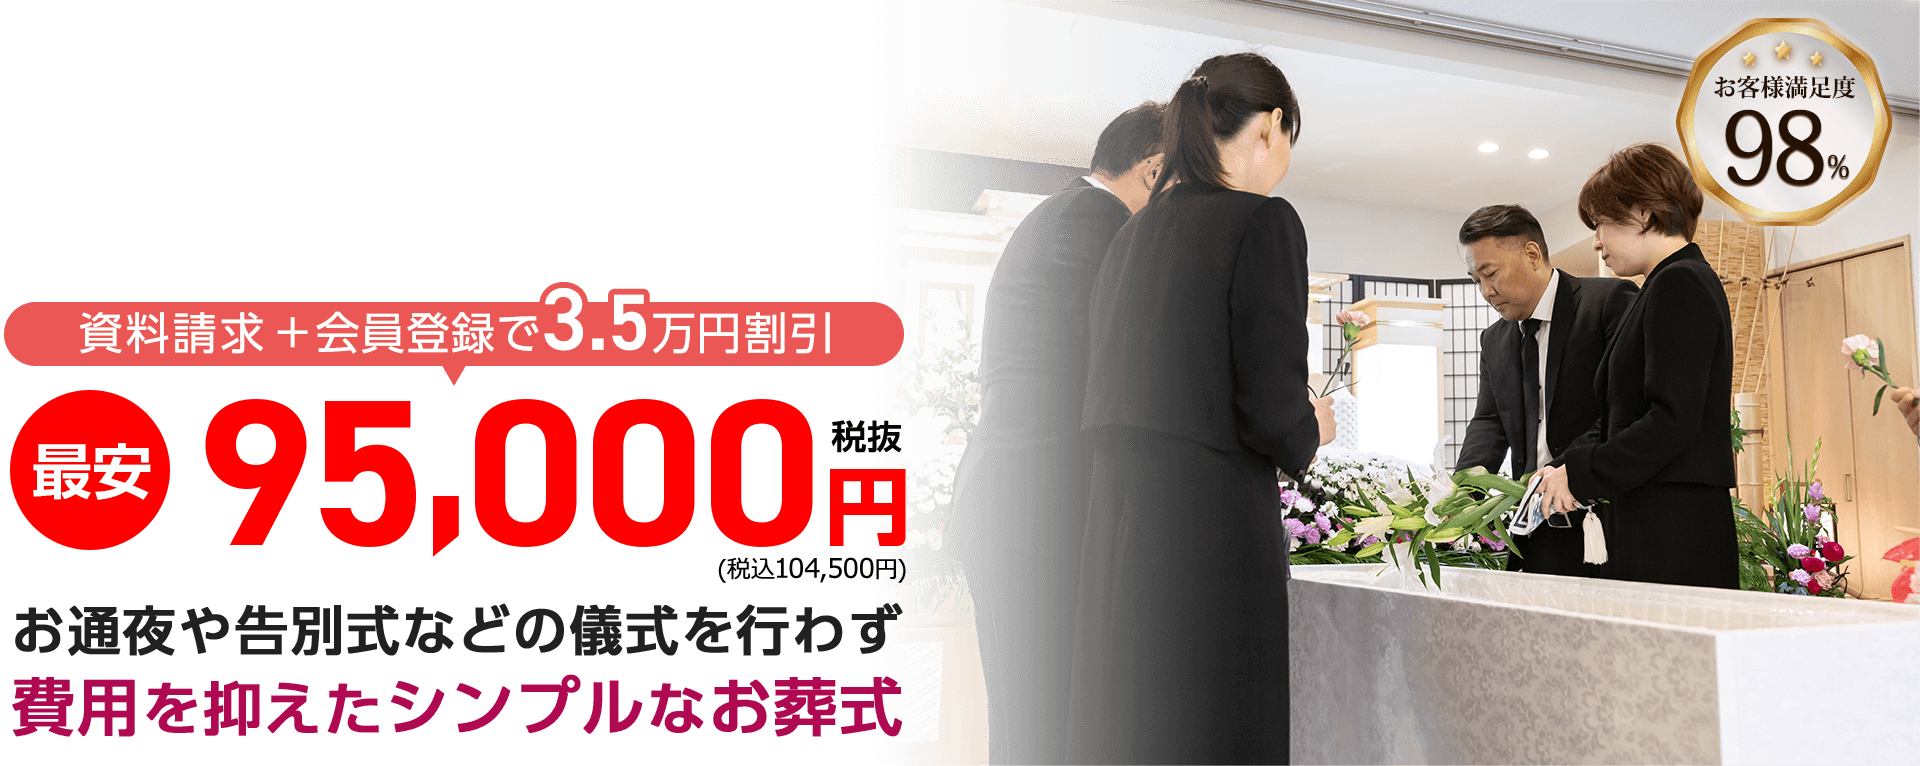 松戸市で最安価格を実現 直葬･火葬式